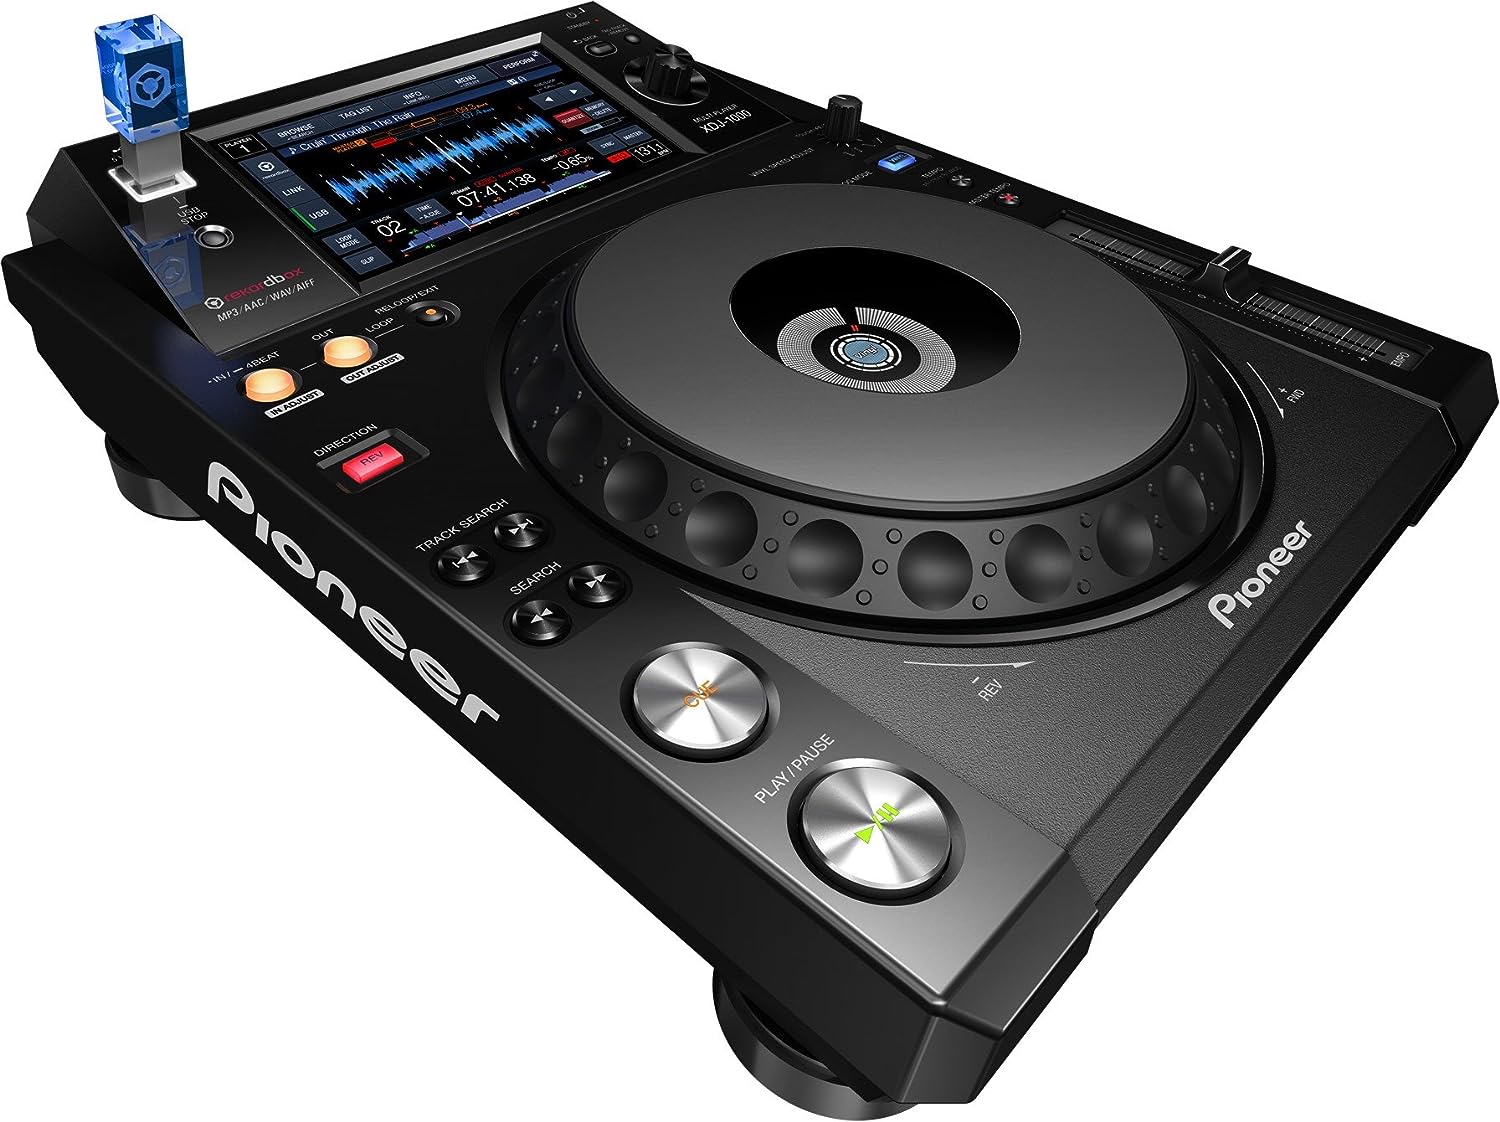 Pioneer XDJ-1000MK2 Performance DJ multi player